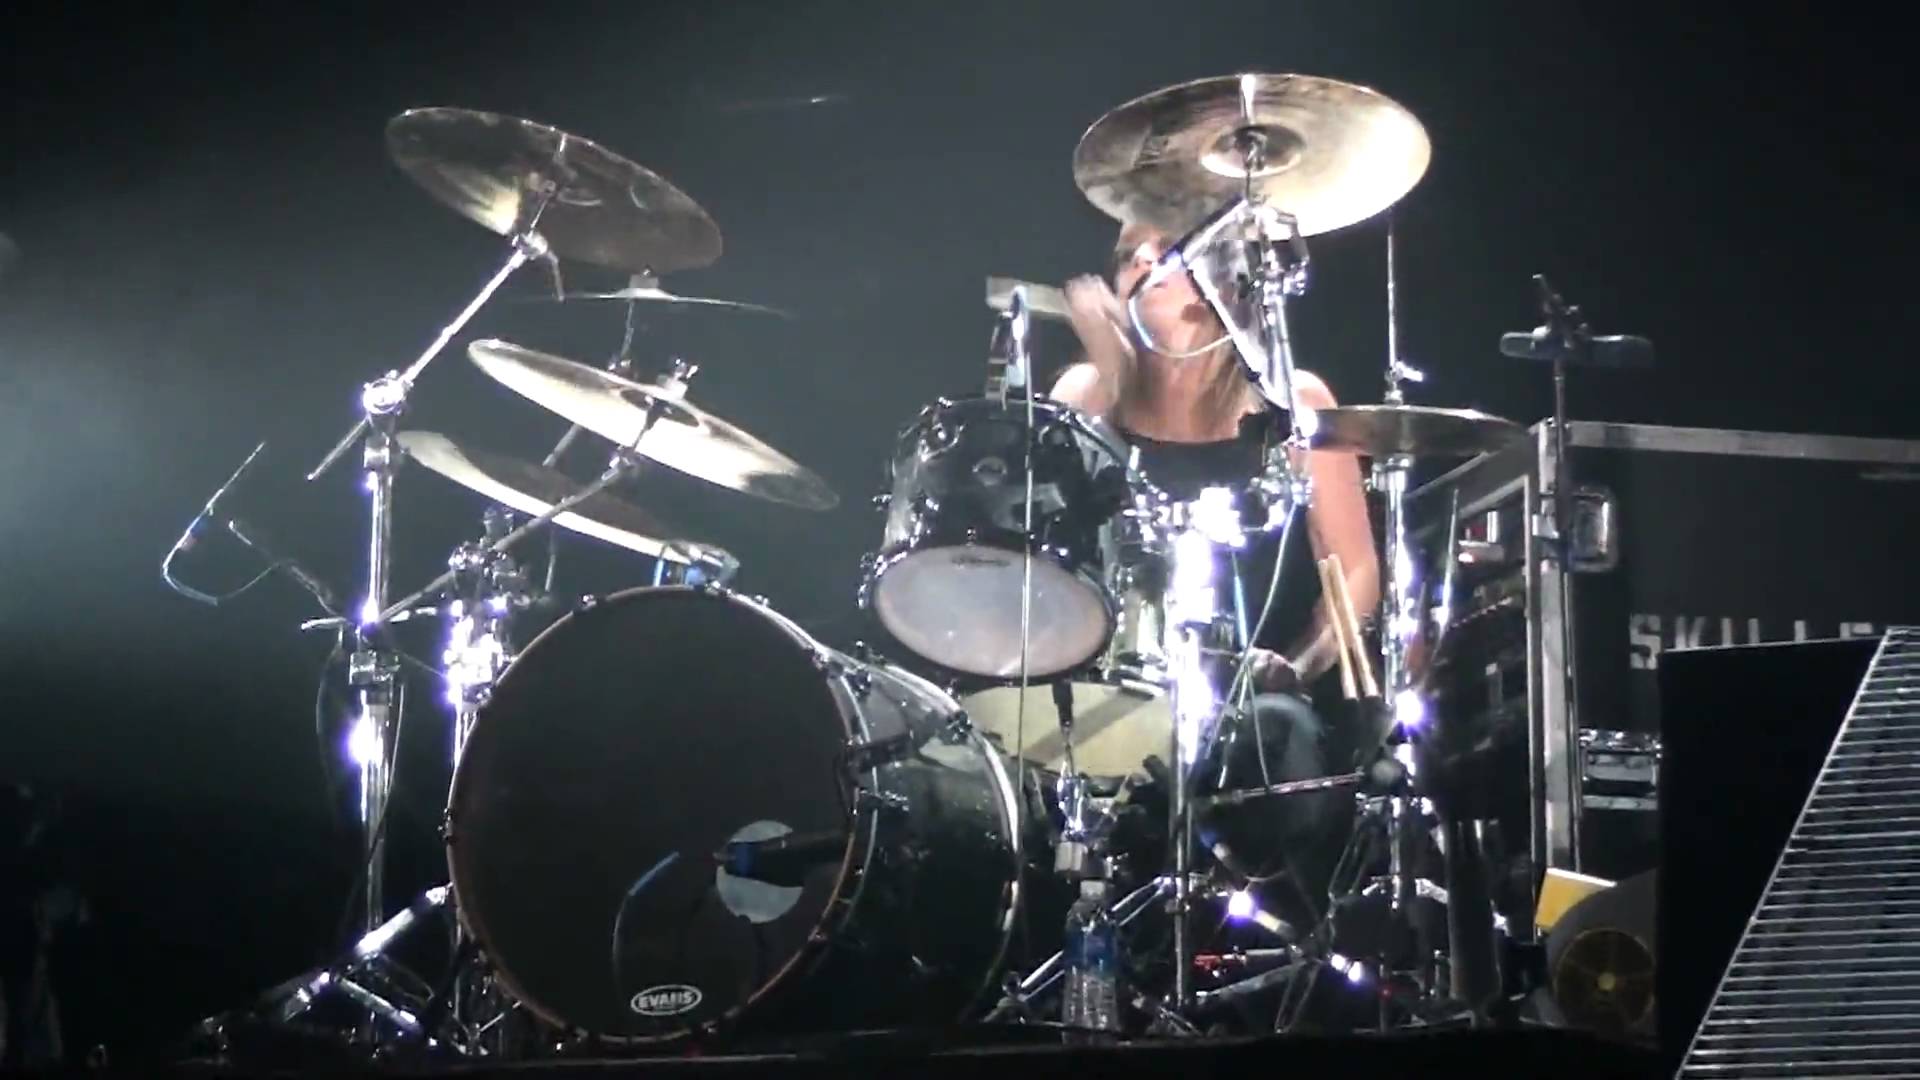 Jen Ledger Drum Solo Skillet Live Cleveland Ohio 12 5 09 HD